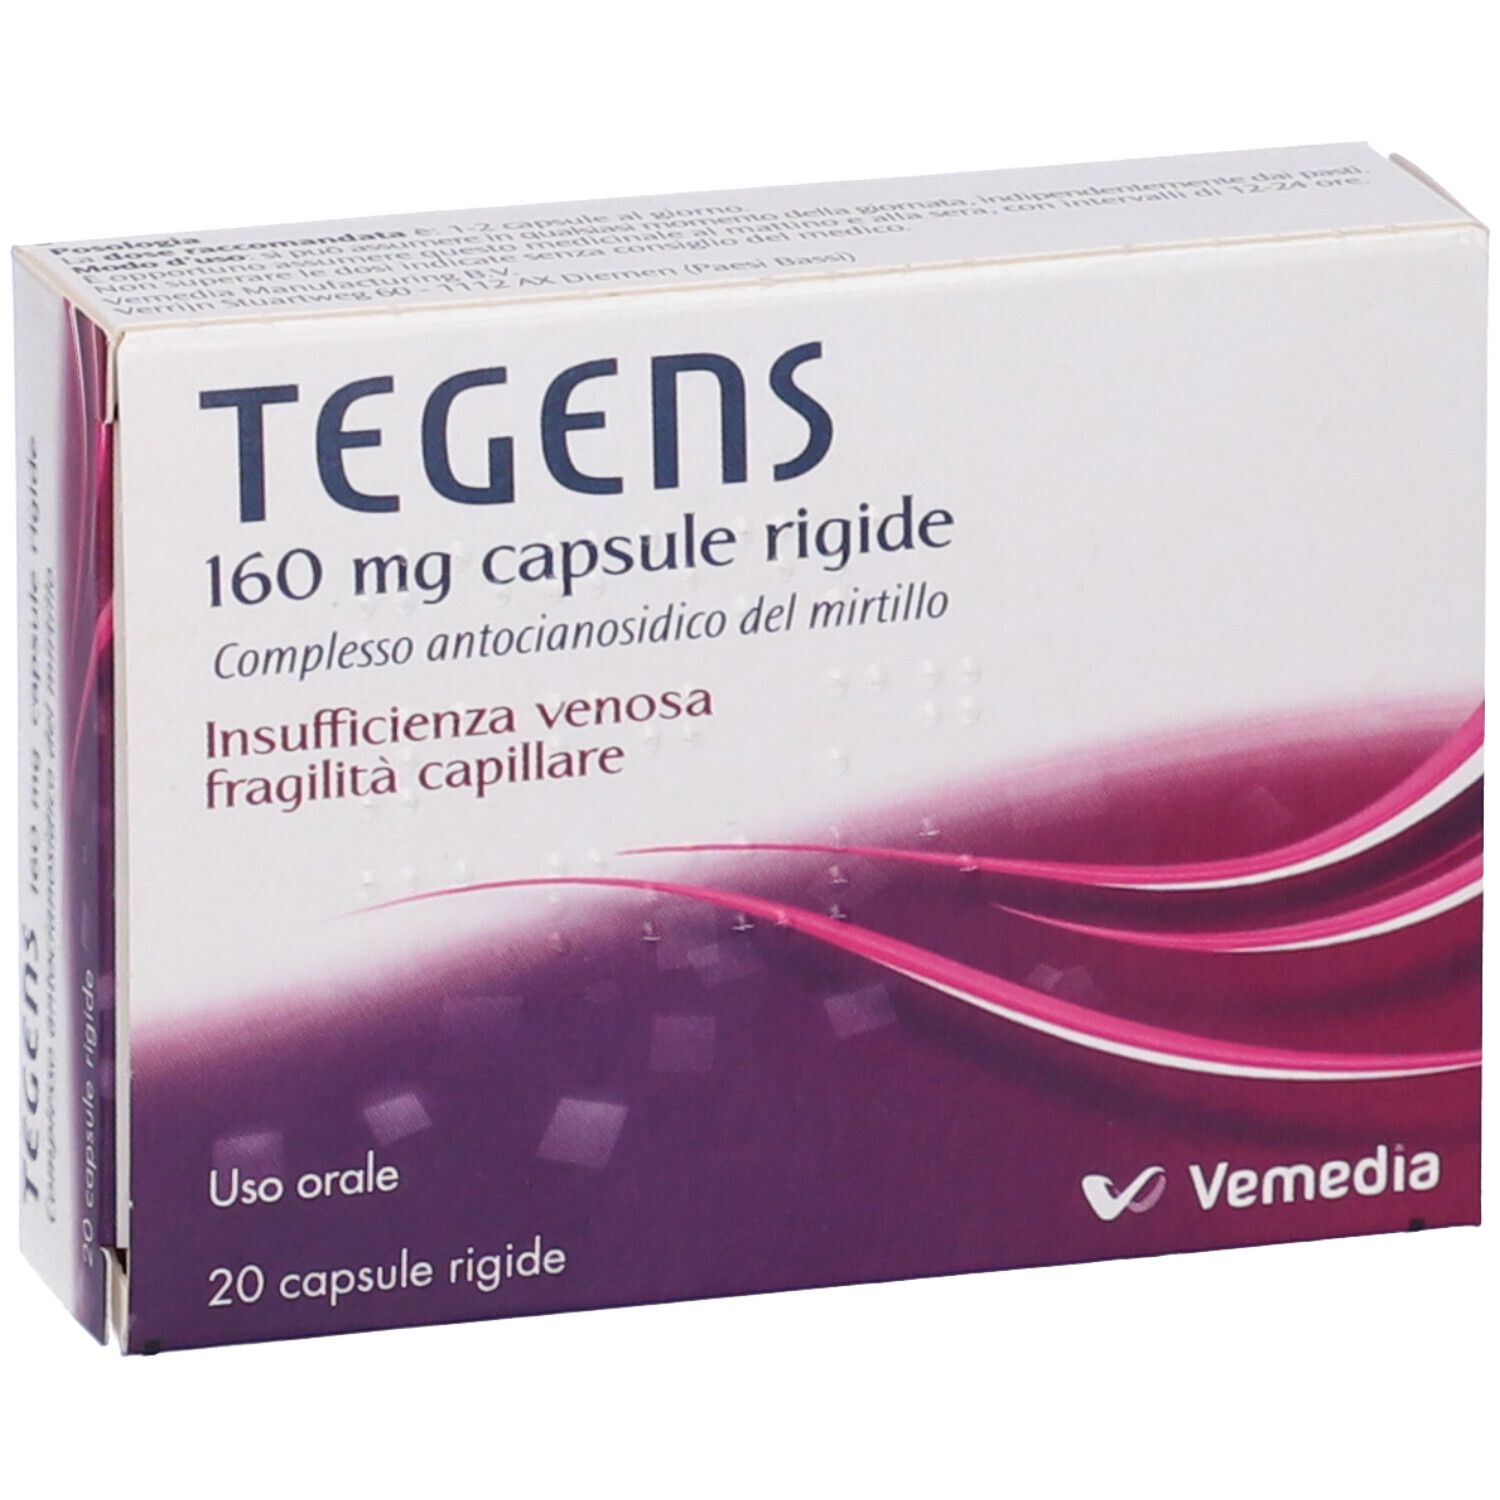 TEGENS 160 mg Capsule Rigide